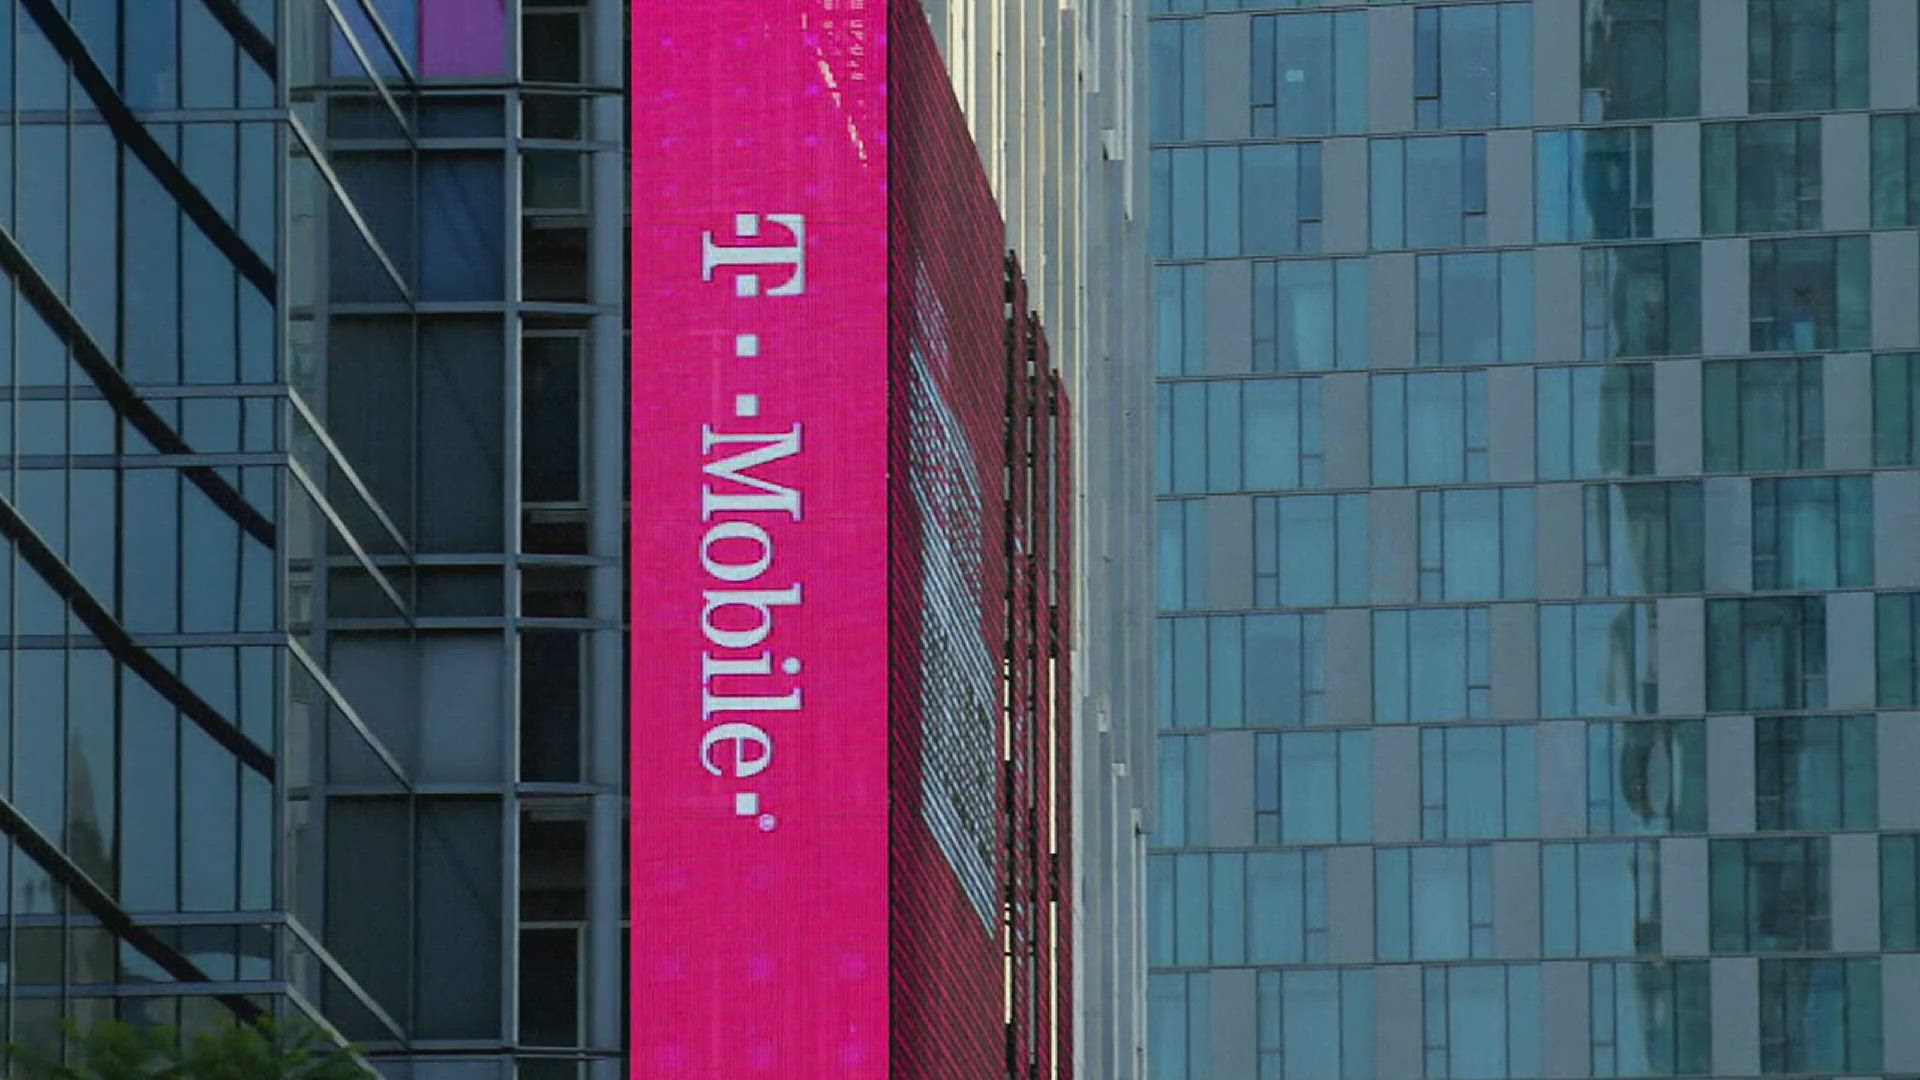 T-Mobile faces the largest fine, at $80 million.